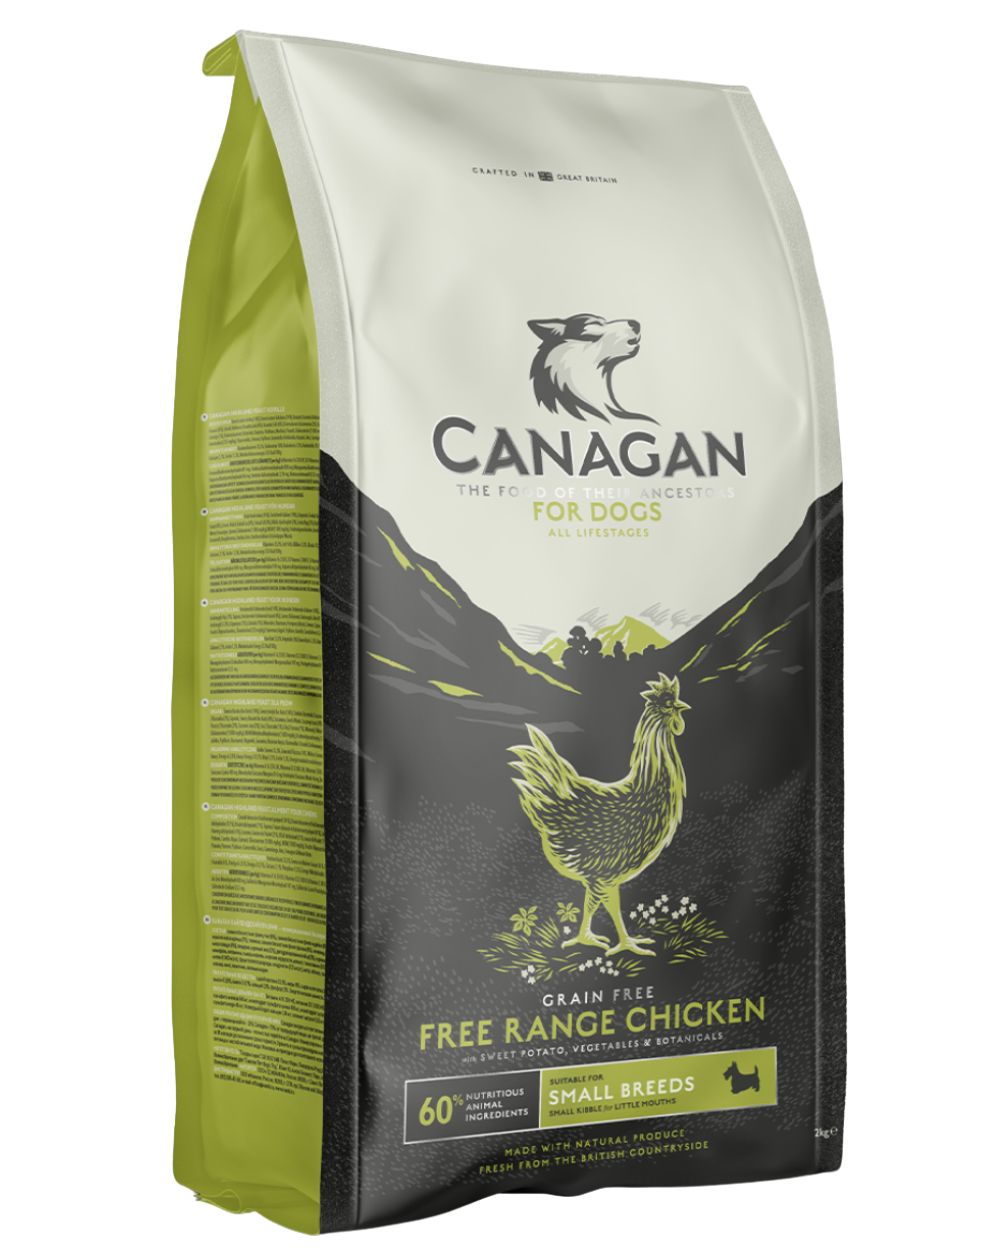 Canagan Dog Food Free Range Chicken